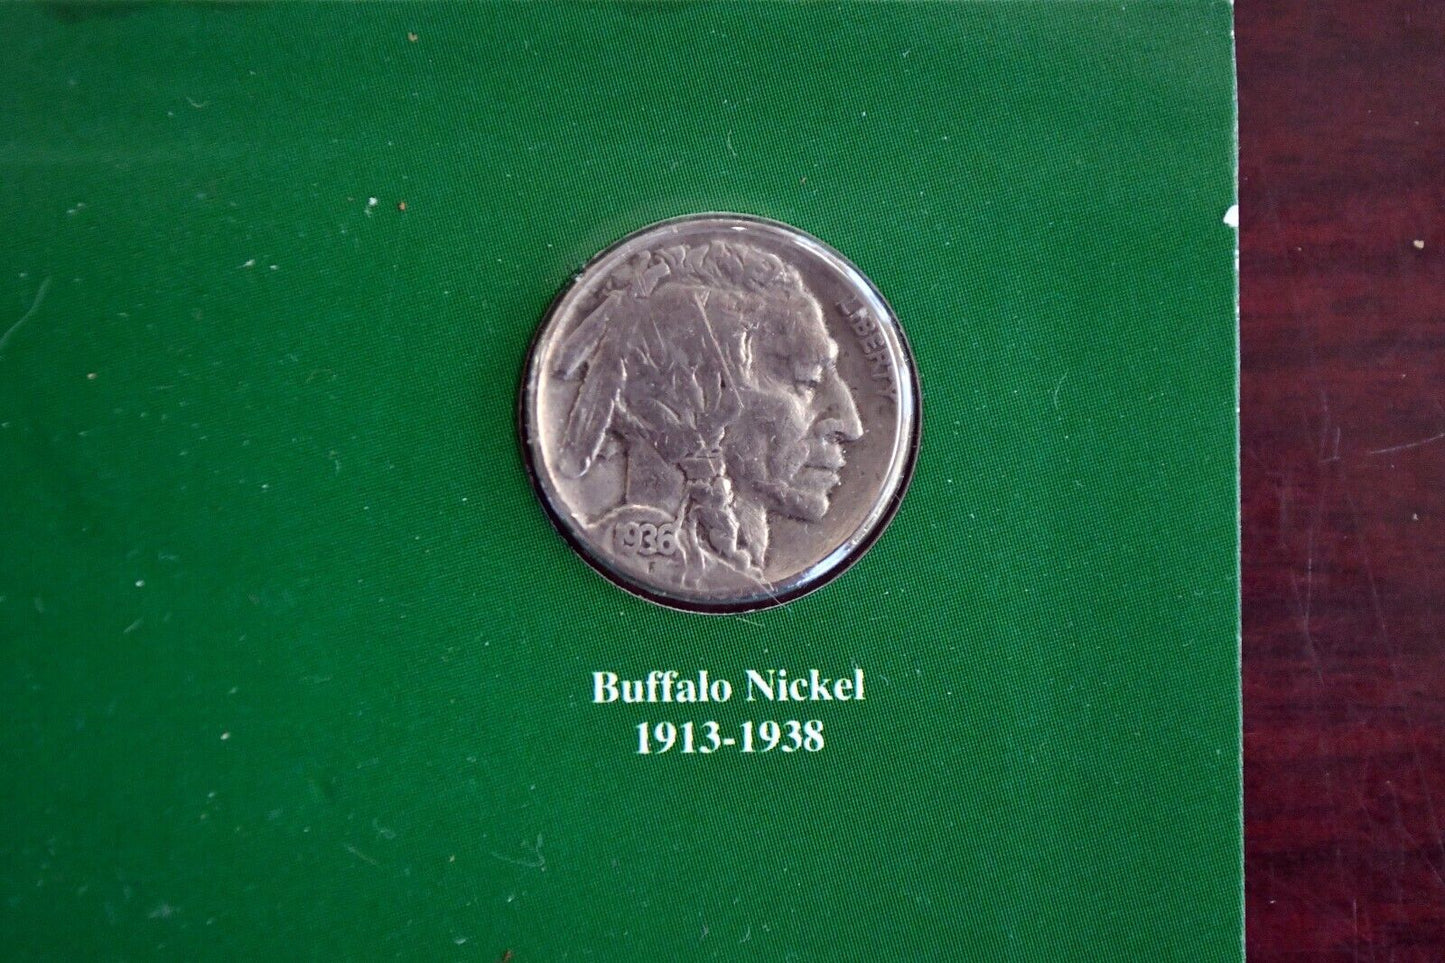 American Nickels of The 20th Century V-Nickel, Buffalo, Jefferson, War Nickel